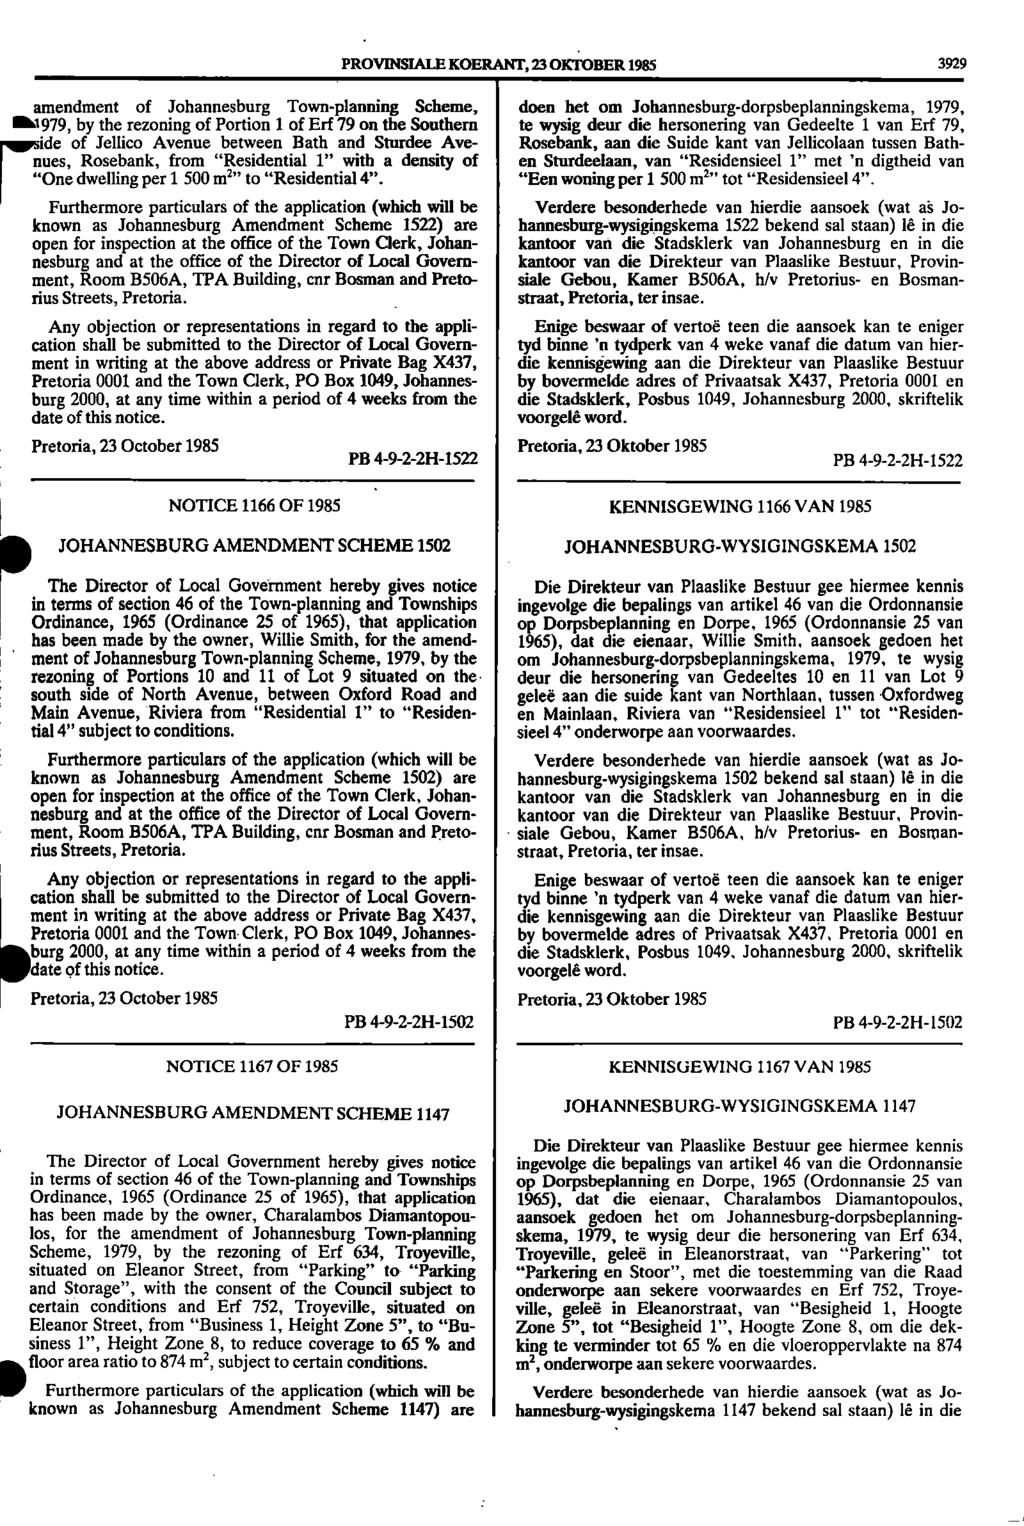 1 ". PROVINSIALE KOERANT, 23 OKTOBER 1985 3929 amendment of Johannesburg Townplanning Scheme, doen het om Johannesburg dorpsbeplanningskema, 1979, 111k1979, by the rezoning of Portion 1 of Erf 79 on